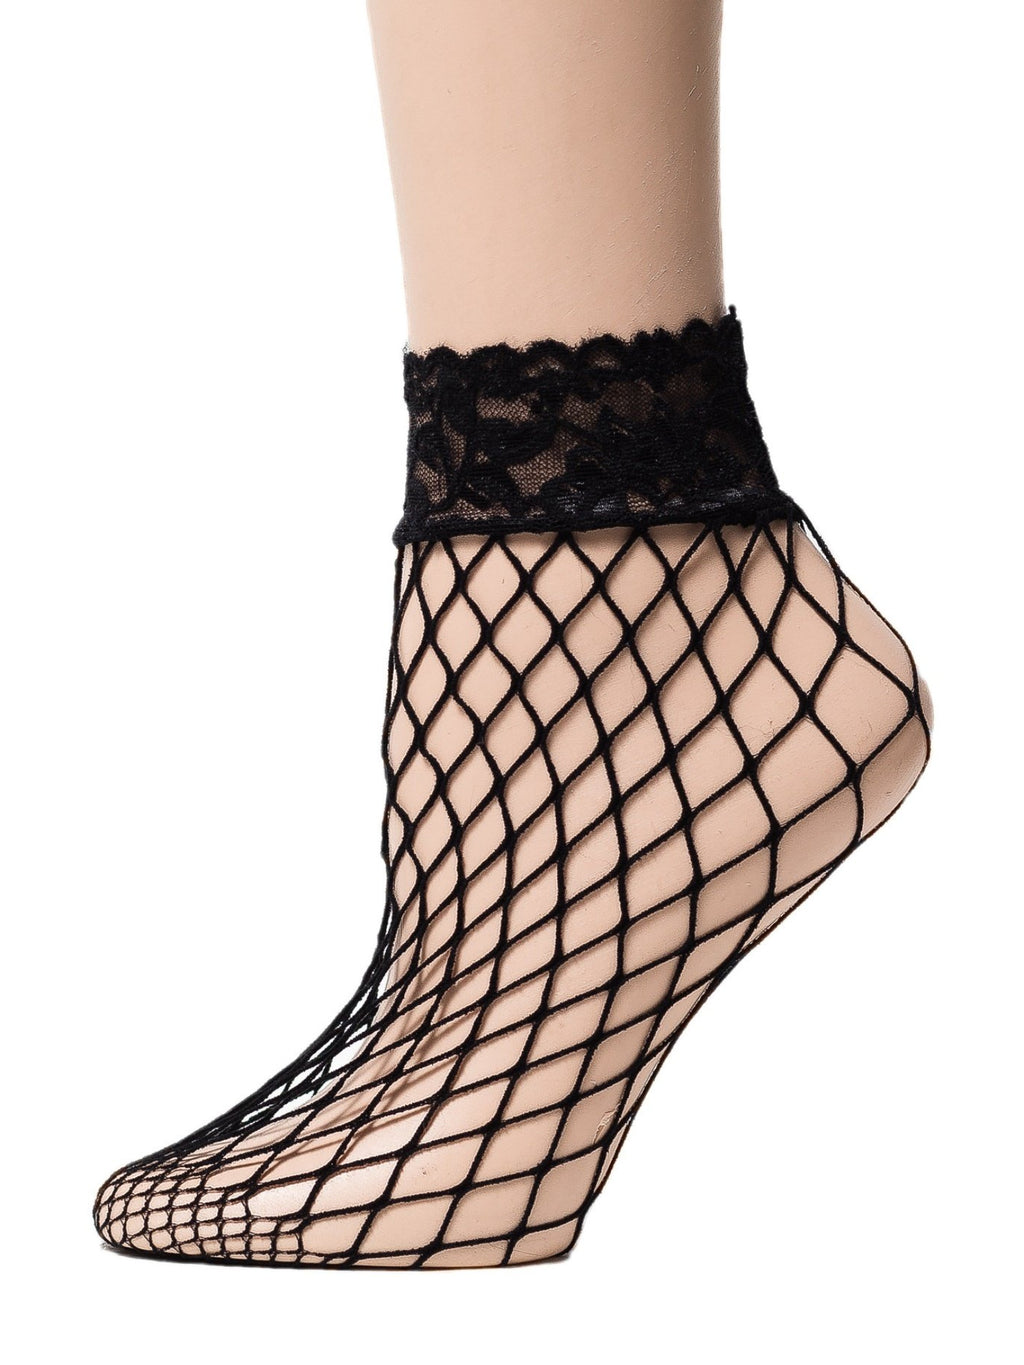 Classy Black Fishnet Socks - Global Trendz Fashion®